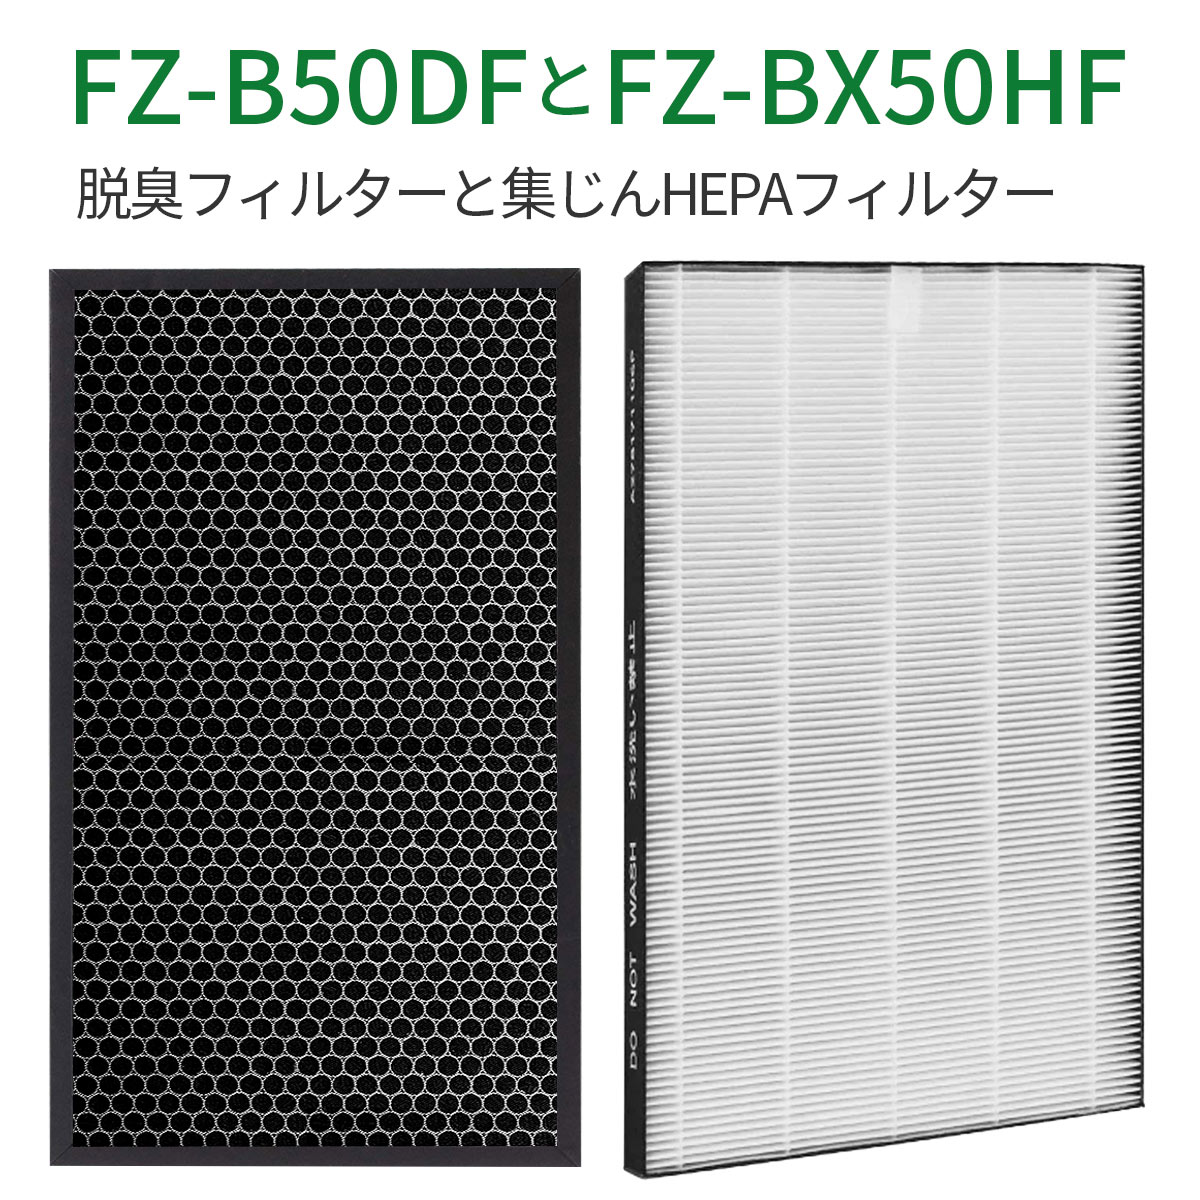 FZ-BX50HF FZ-B50DF 空気清浄機 フィルター 集じんHEPAフィルター fz-bx50hf 脱臭フィルター fz-b50df シャープ 加湿空気清浄機 kc-b50 kc-50e9 kc-500y5交換用 集塵 脱臭 フィルターセット (互換品/1セット)